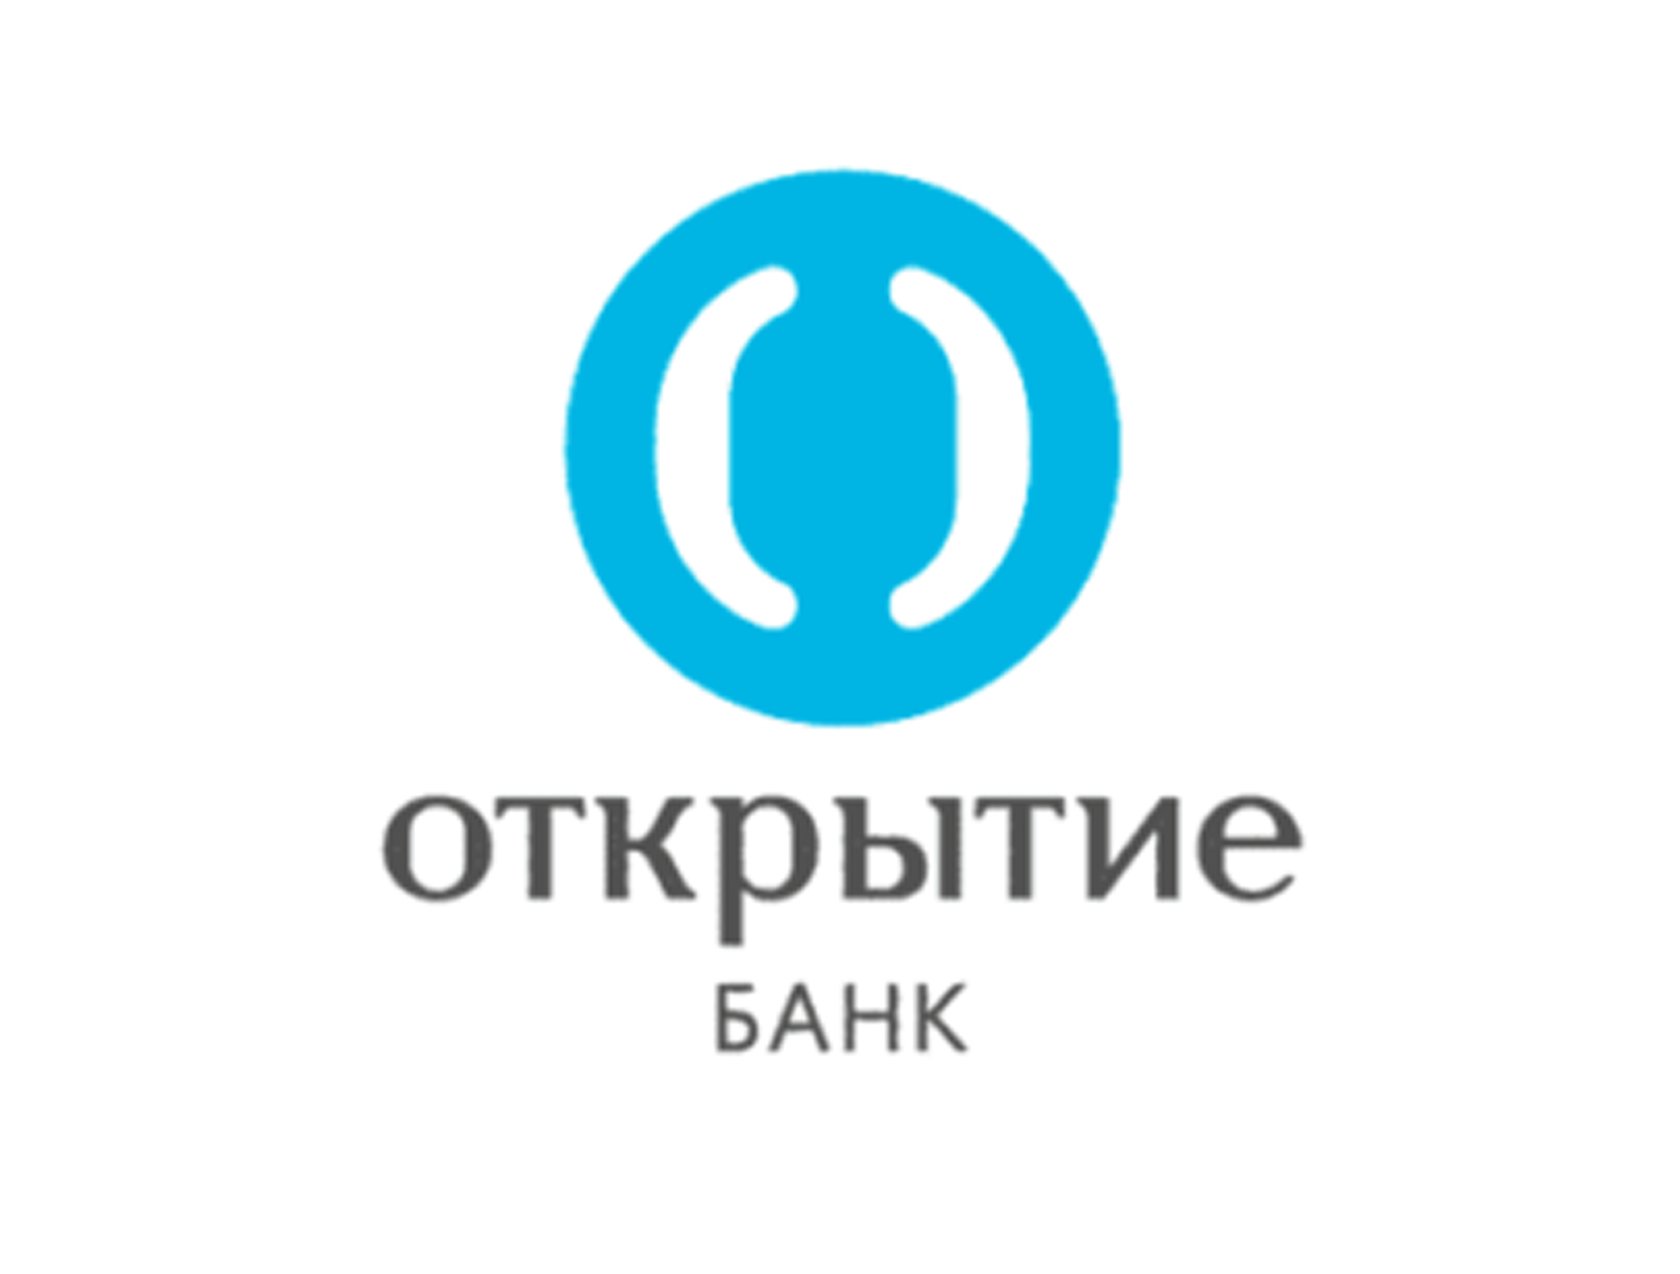 Банк открыта рядом. ПАО банк ФК открытие. Открытие логотип. Логотип банка открытие. Банк открытие Омск.